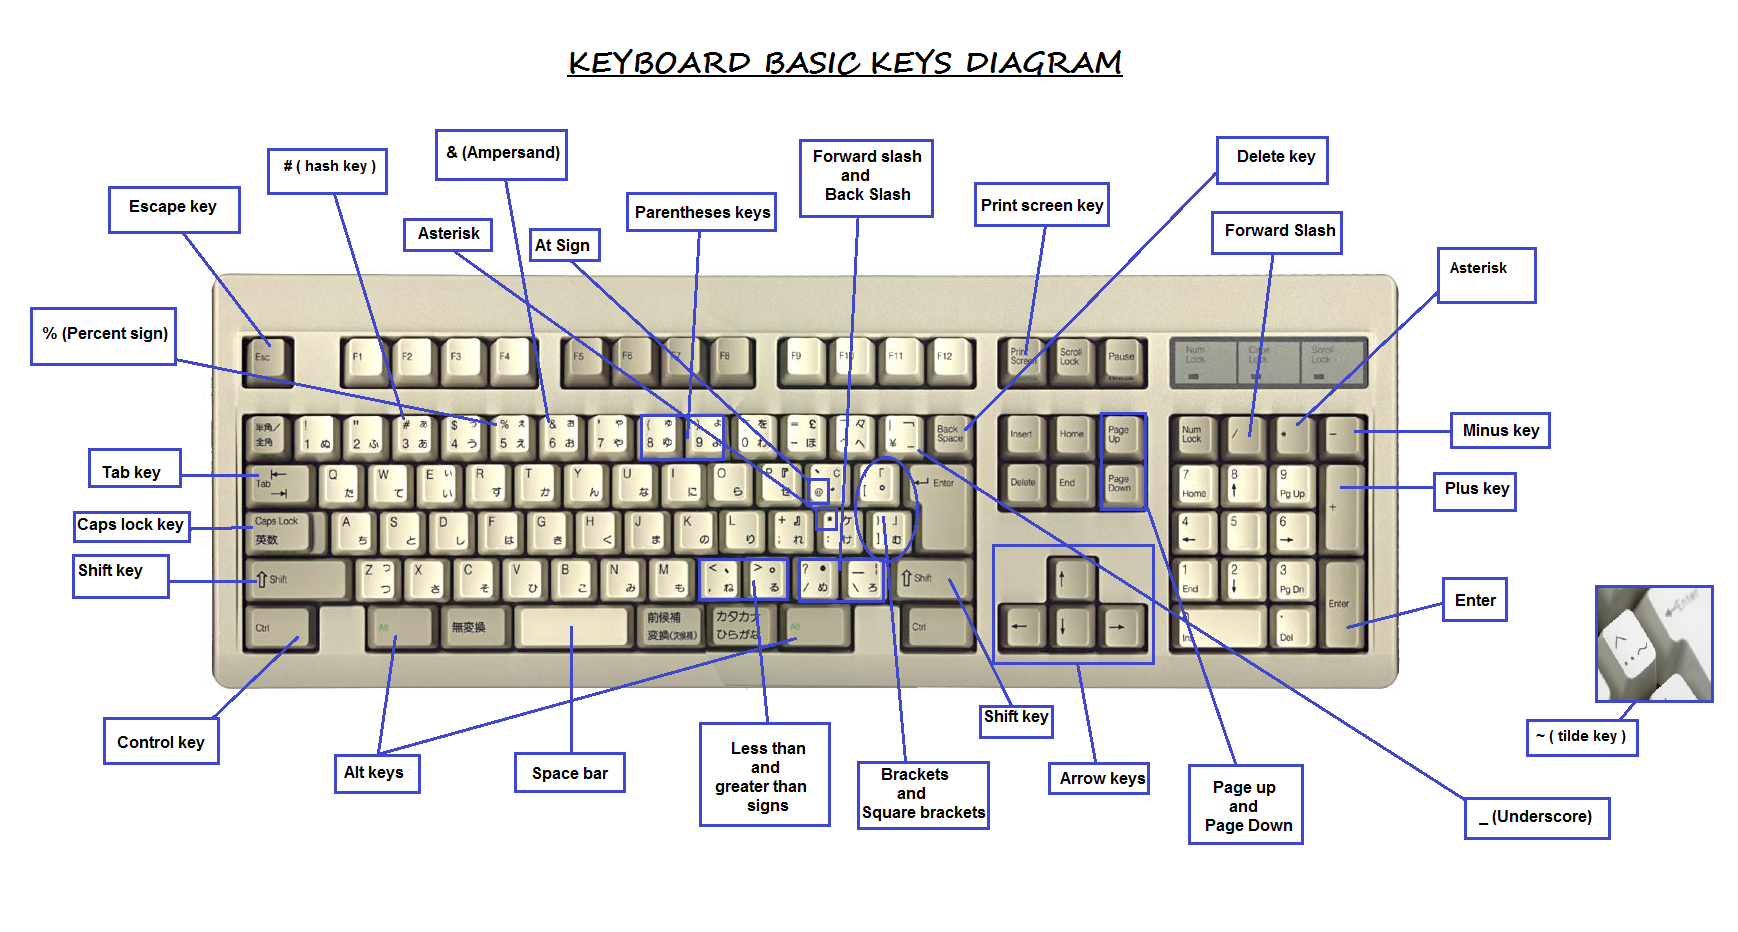 Keyboard Diagram And Key Definitions